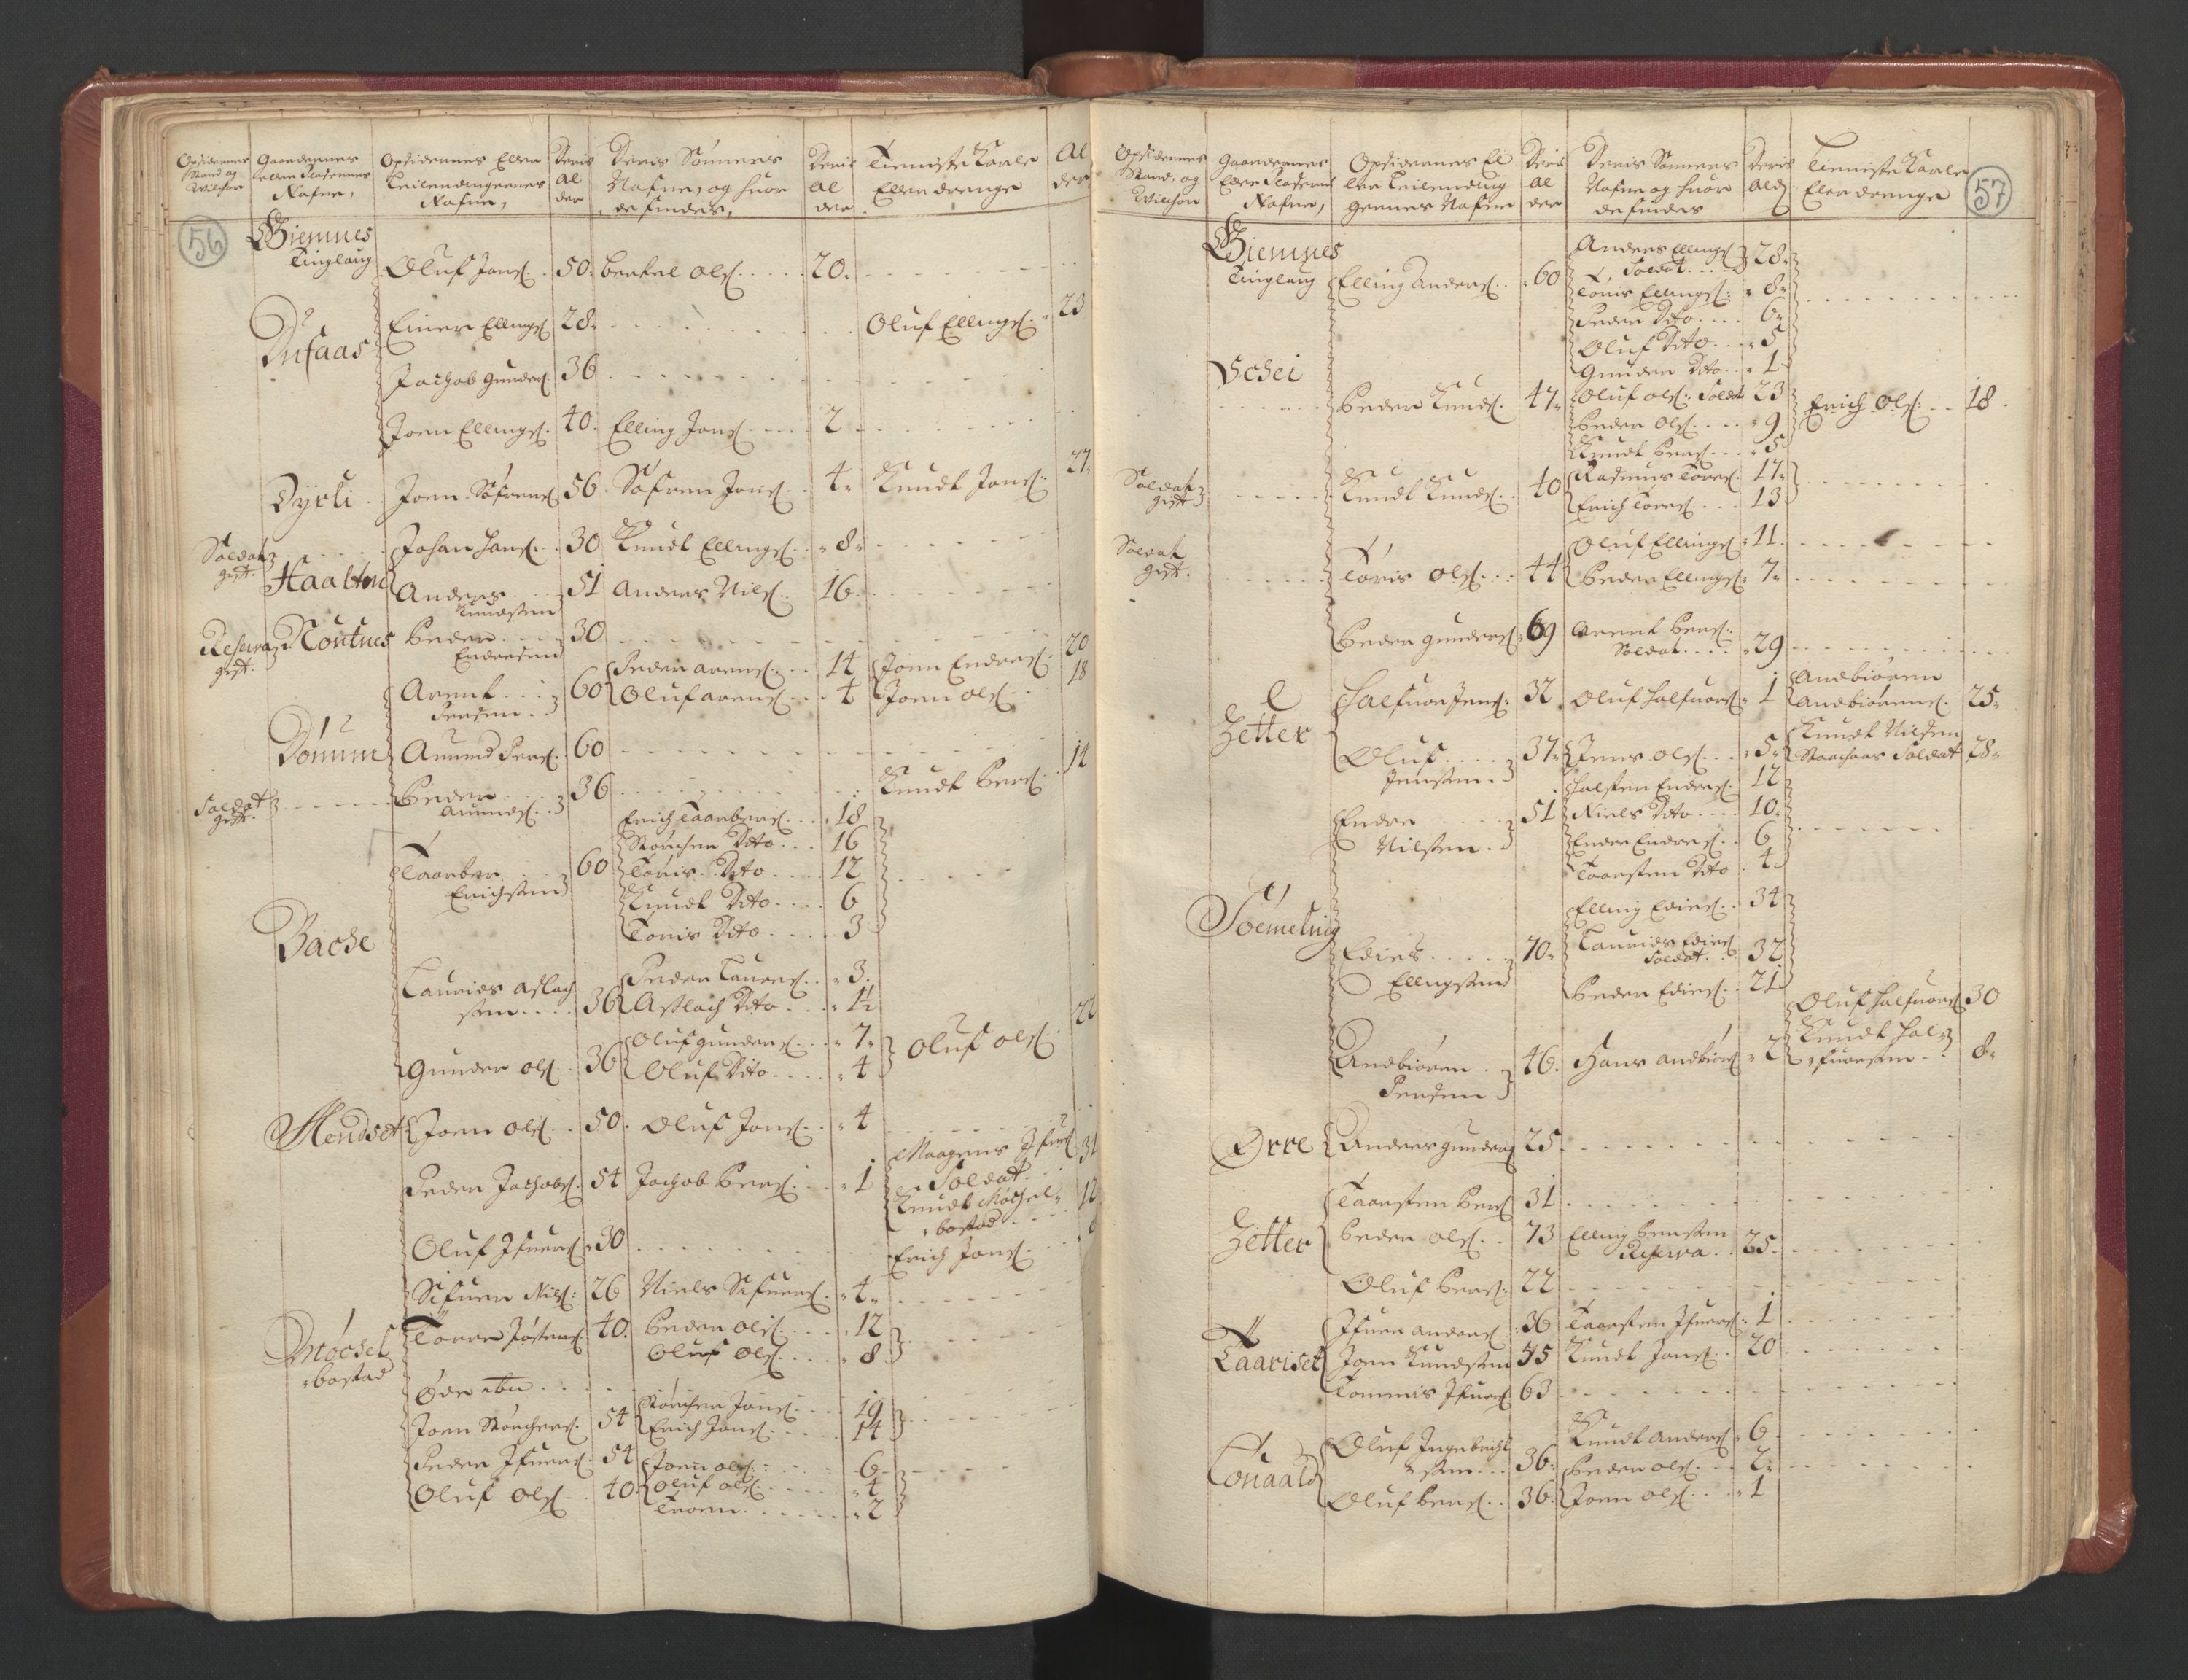 RA, Manntallet 1701, nr. 11: Nordmøre fogderi og Romsdal fogderi, 1701, s. 56-57